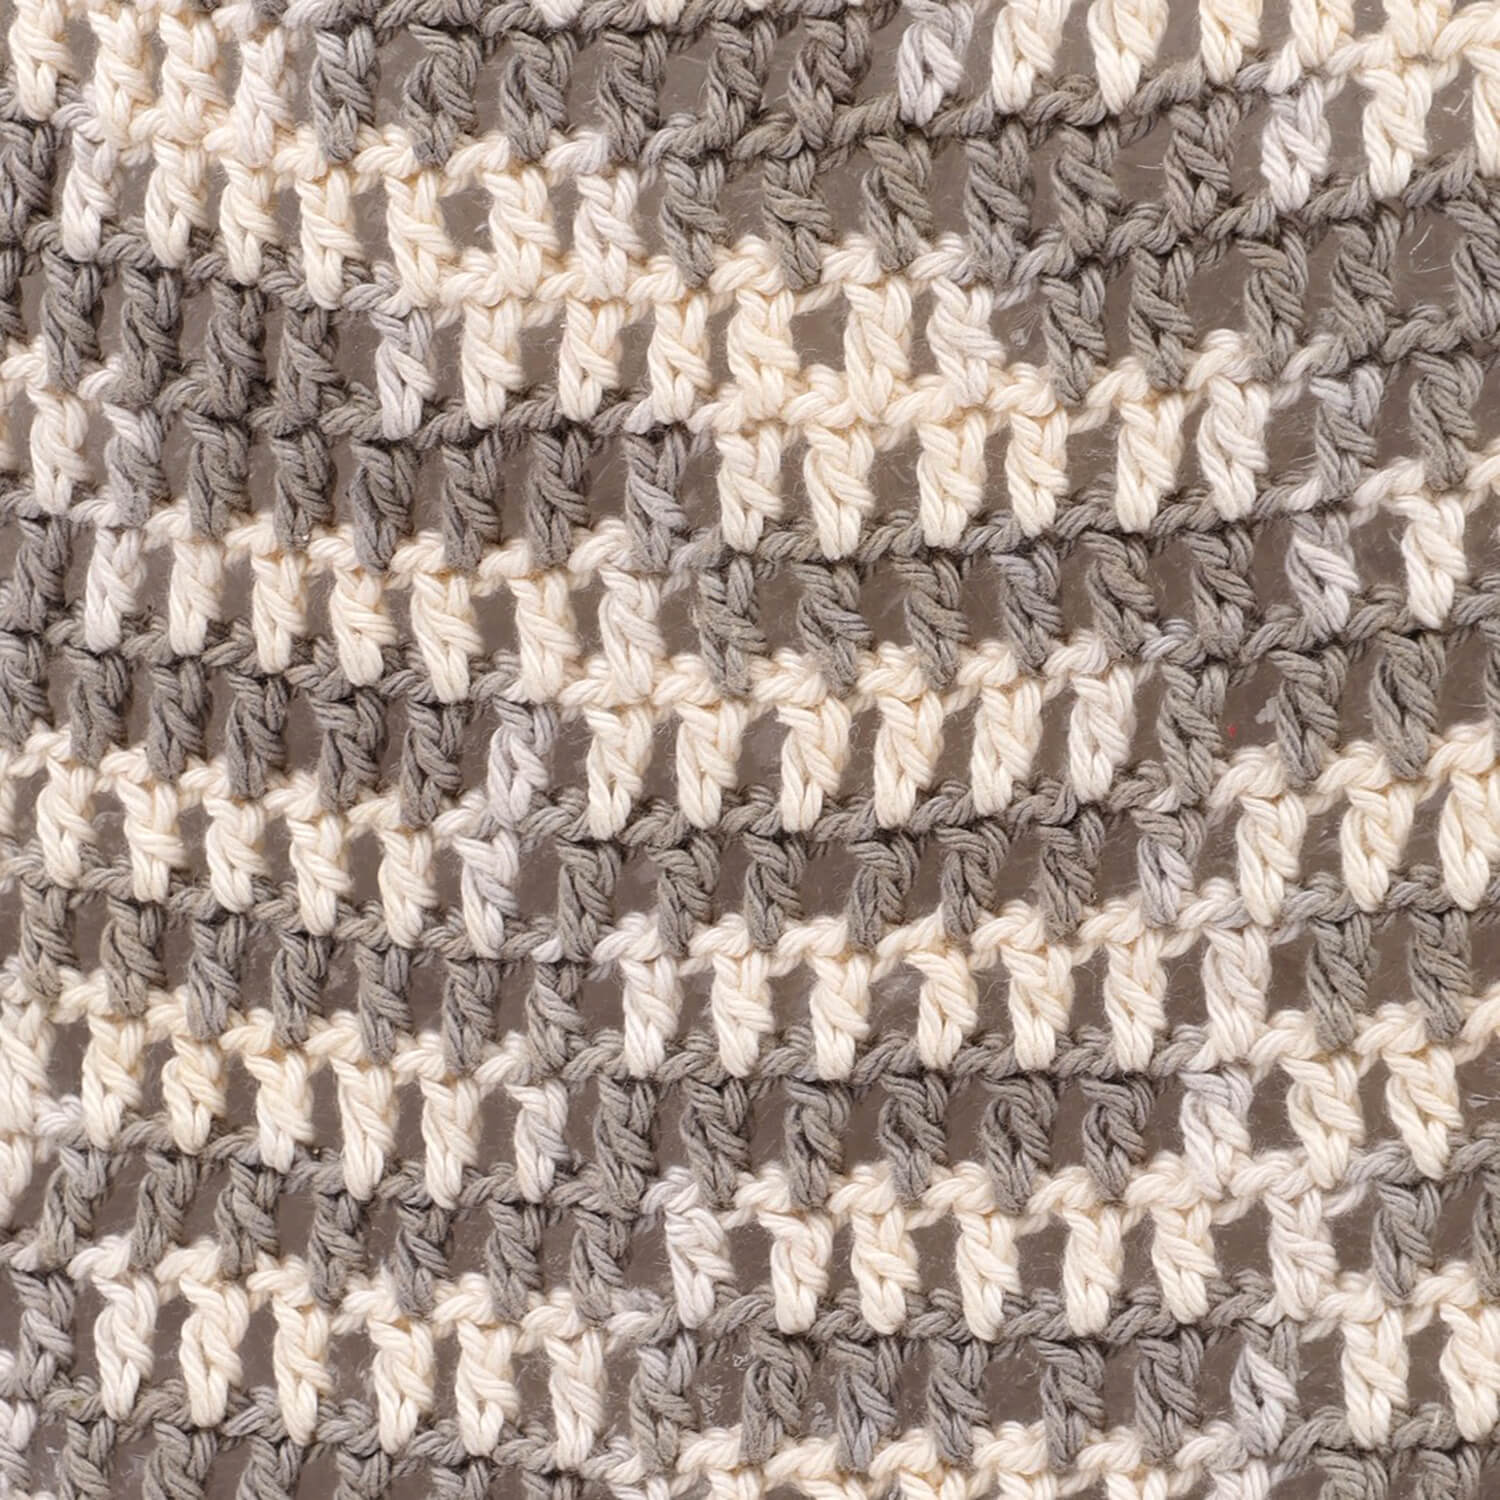 Handmade Crochet Market Bag - Cream, Grey 2800